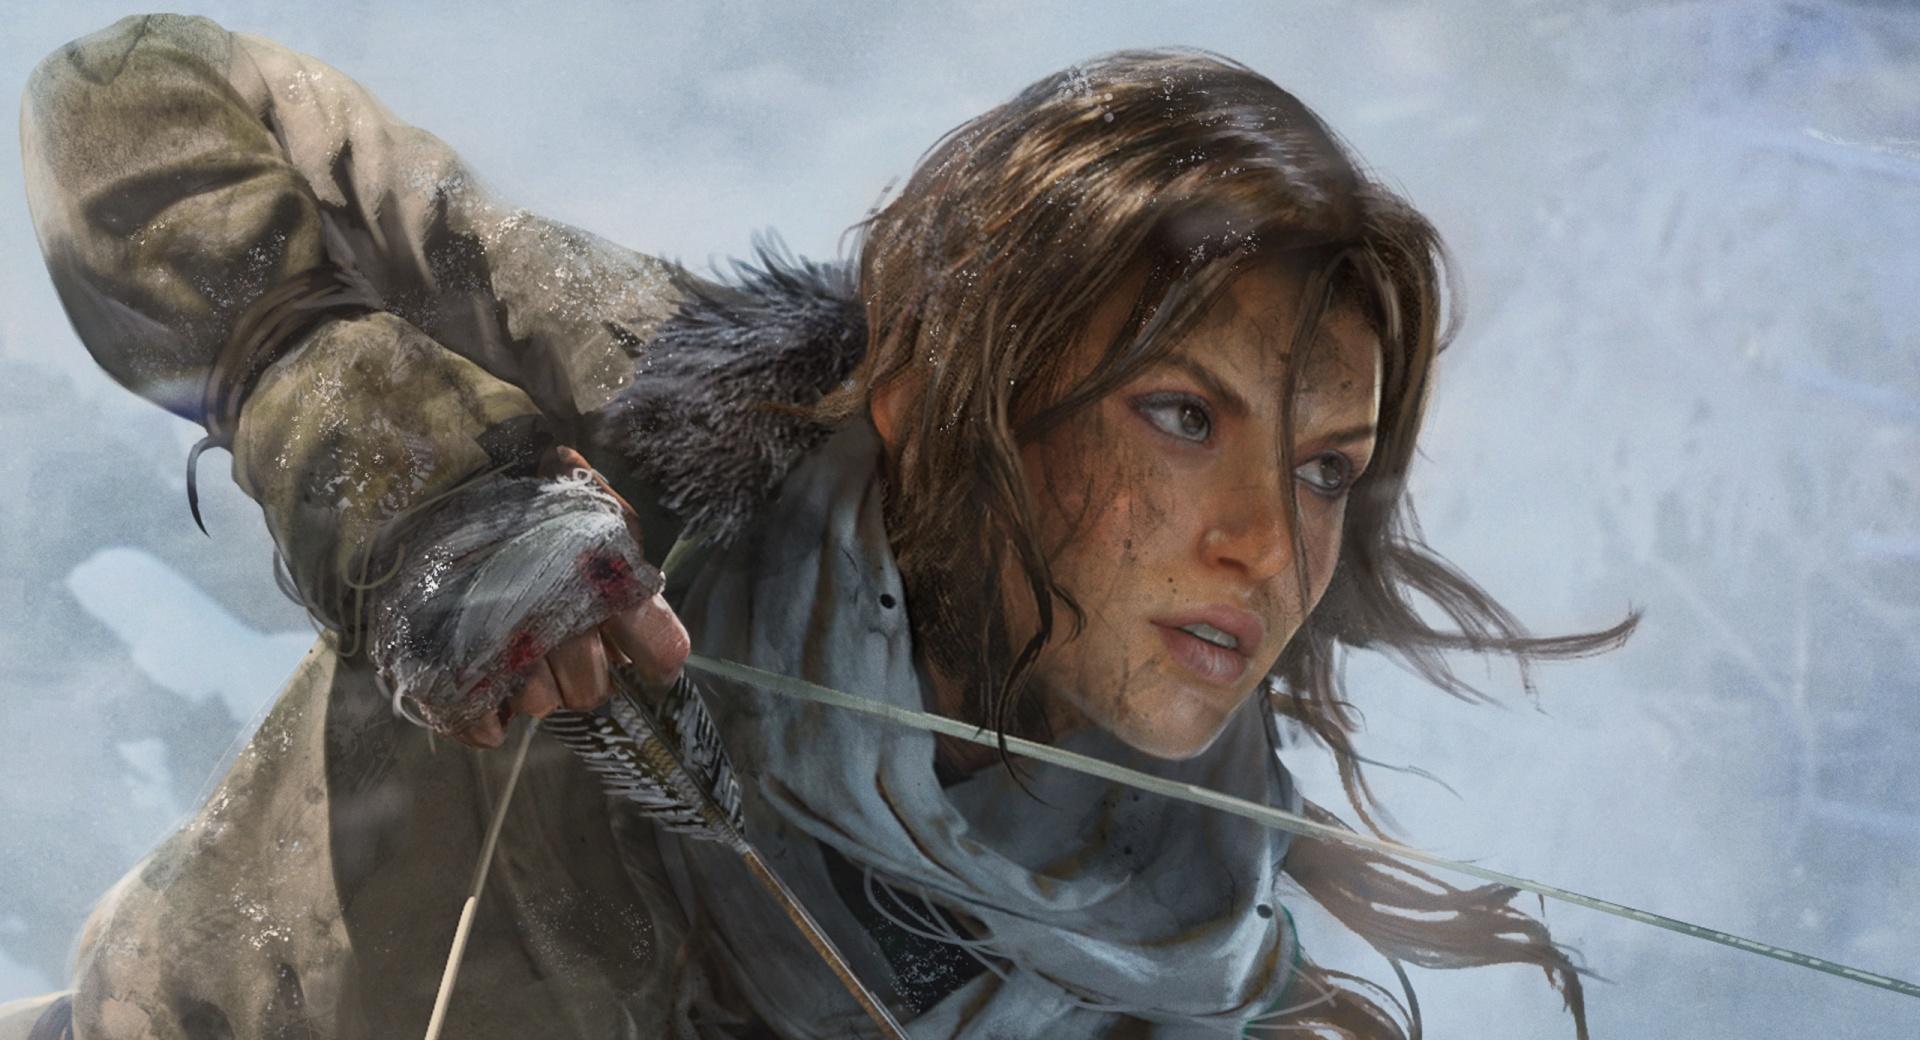 Rise of the Tomb Raider Lara Croft at 1024 x 1024 iPad size wallpapers HD quality